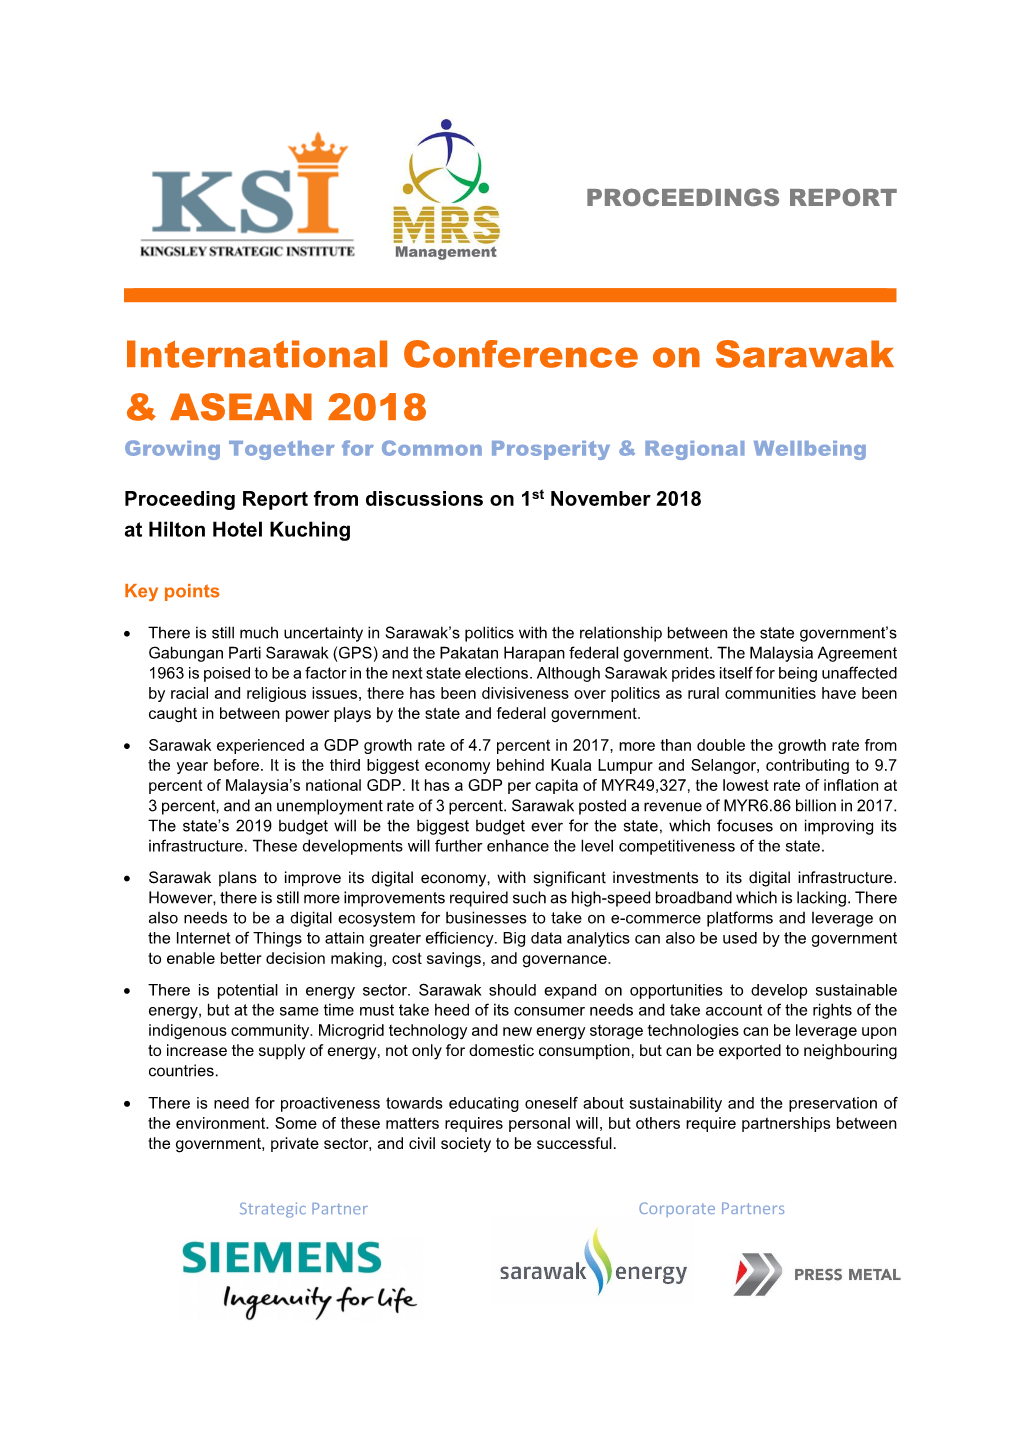 International Conference on Sarawak & ASEAN 2018